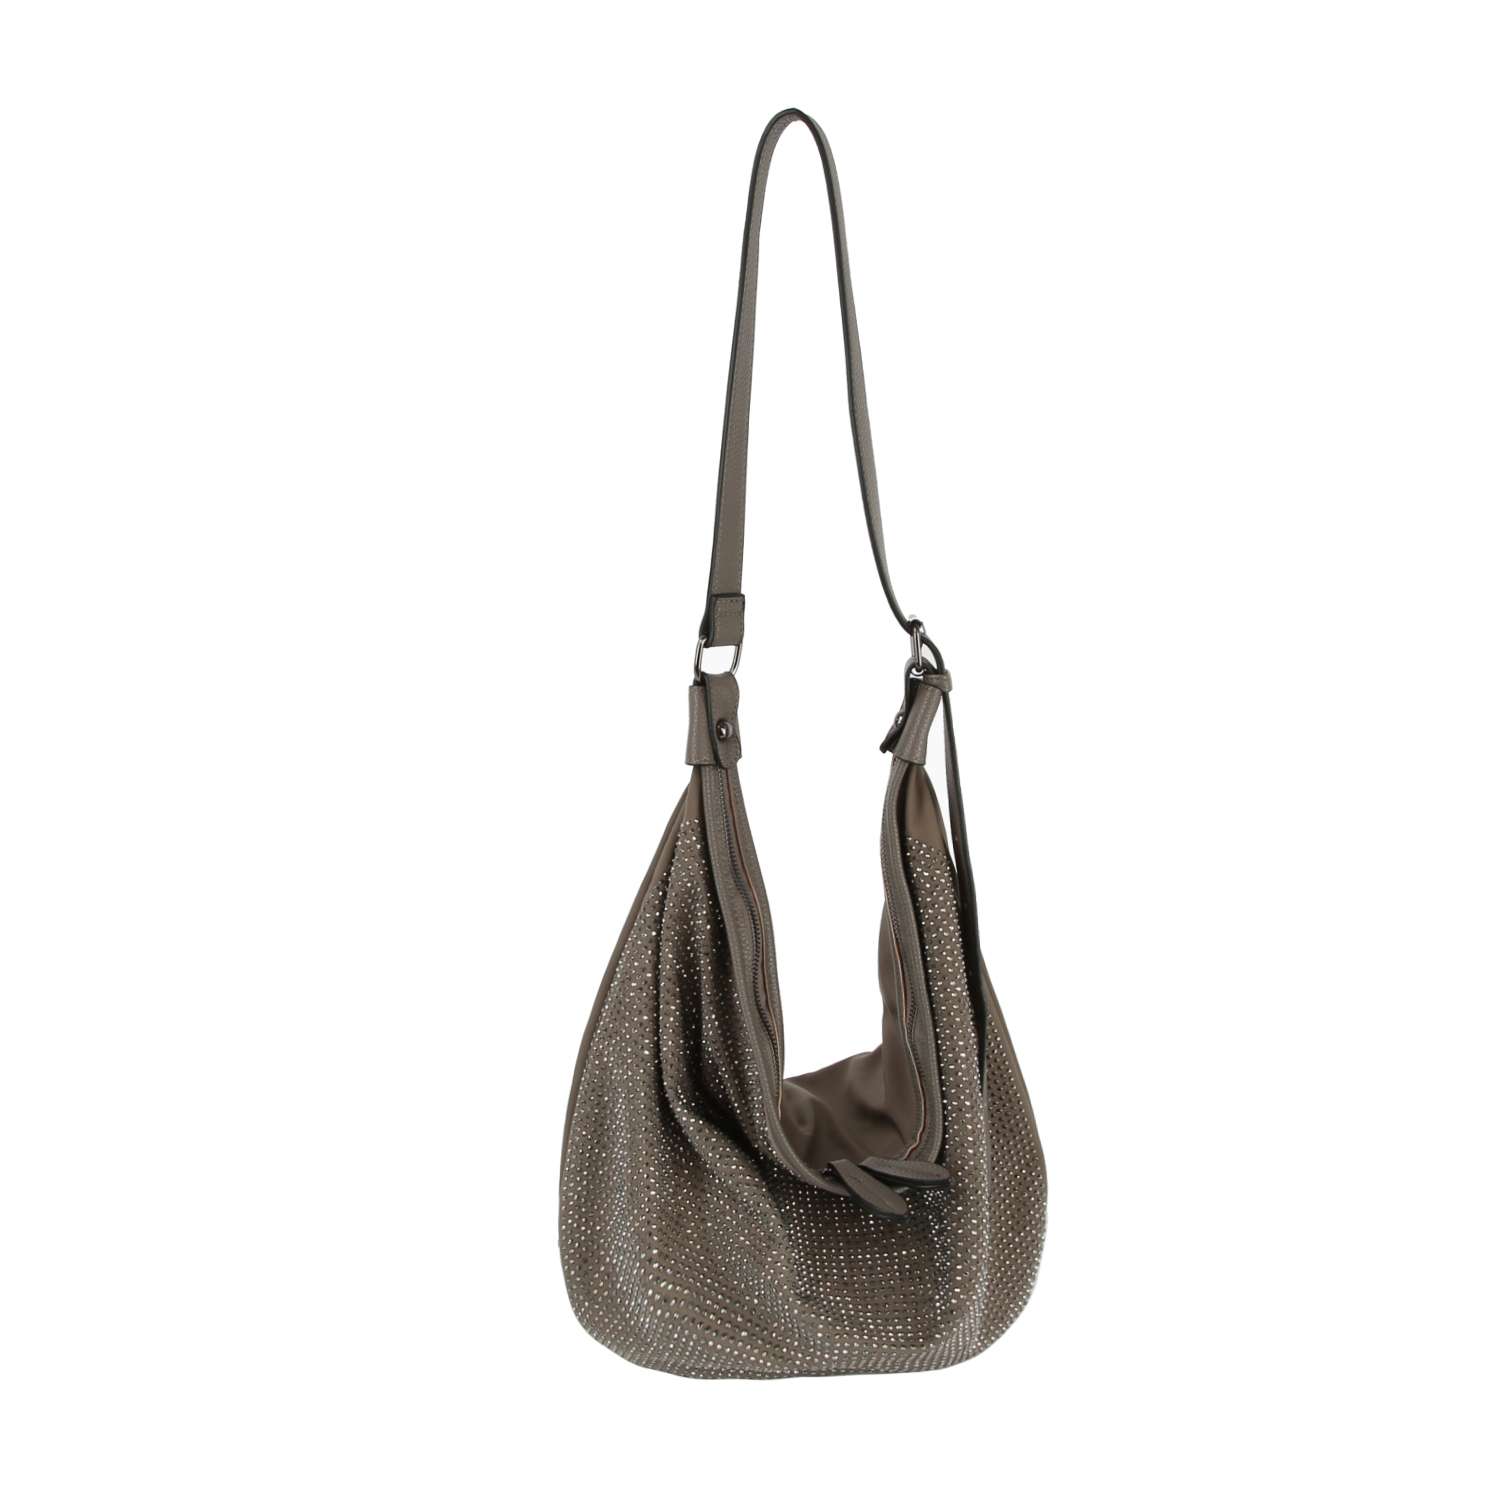 Dazzling Rhinestone Hobo Handbag: Dark Grey - Coco and lulu boutique 